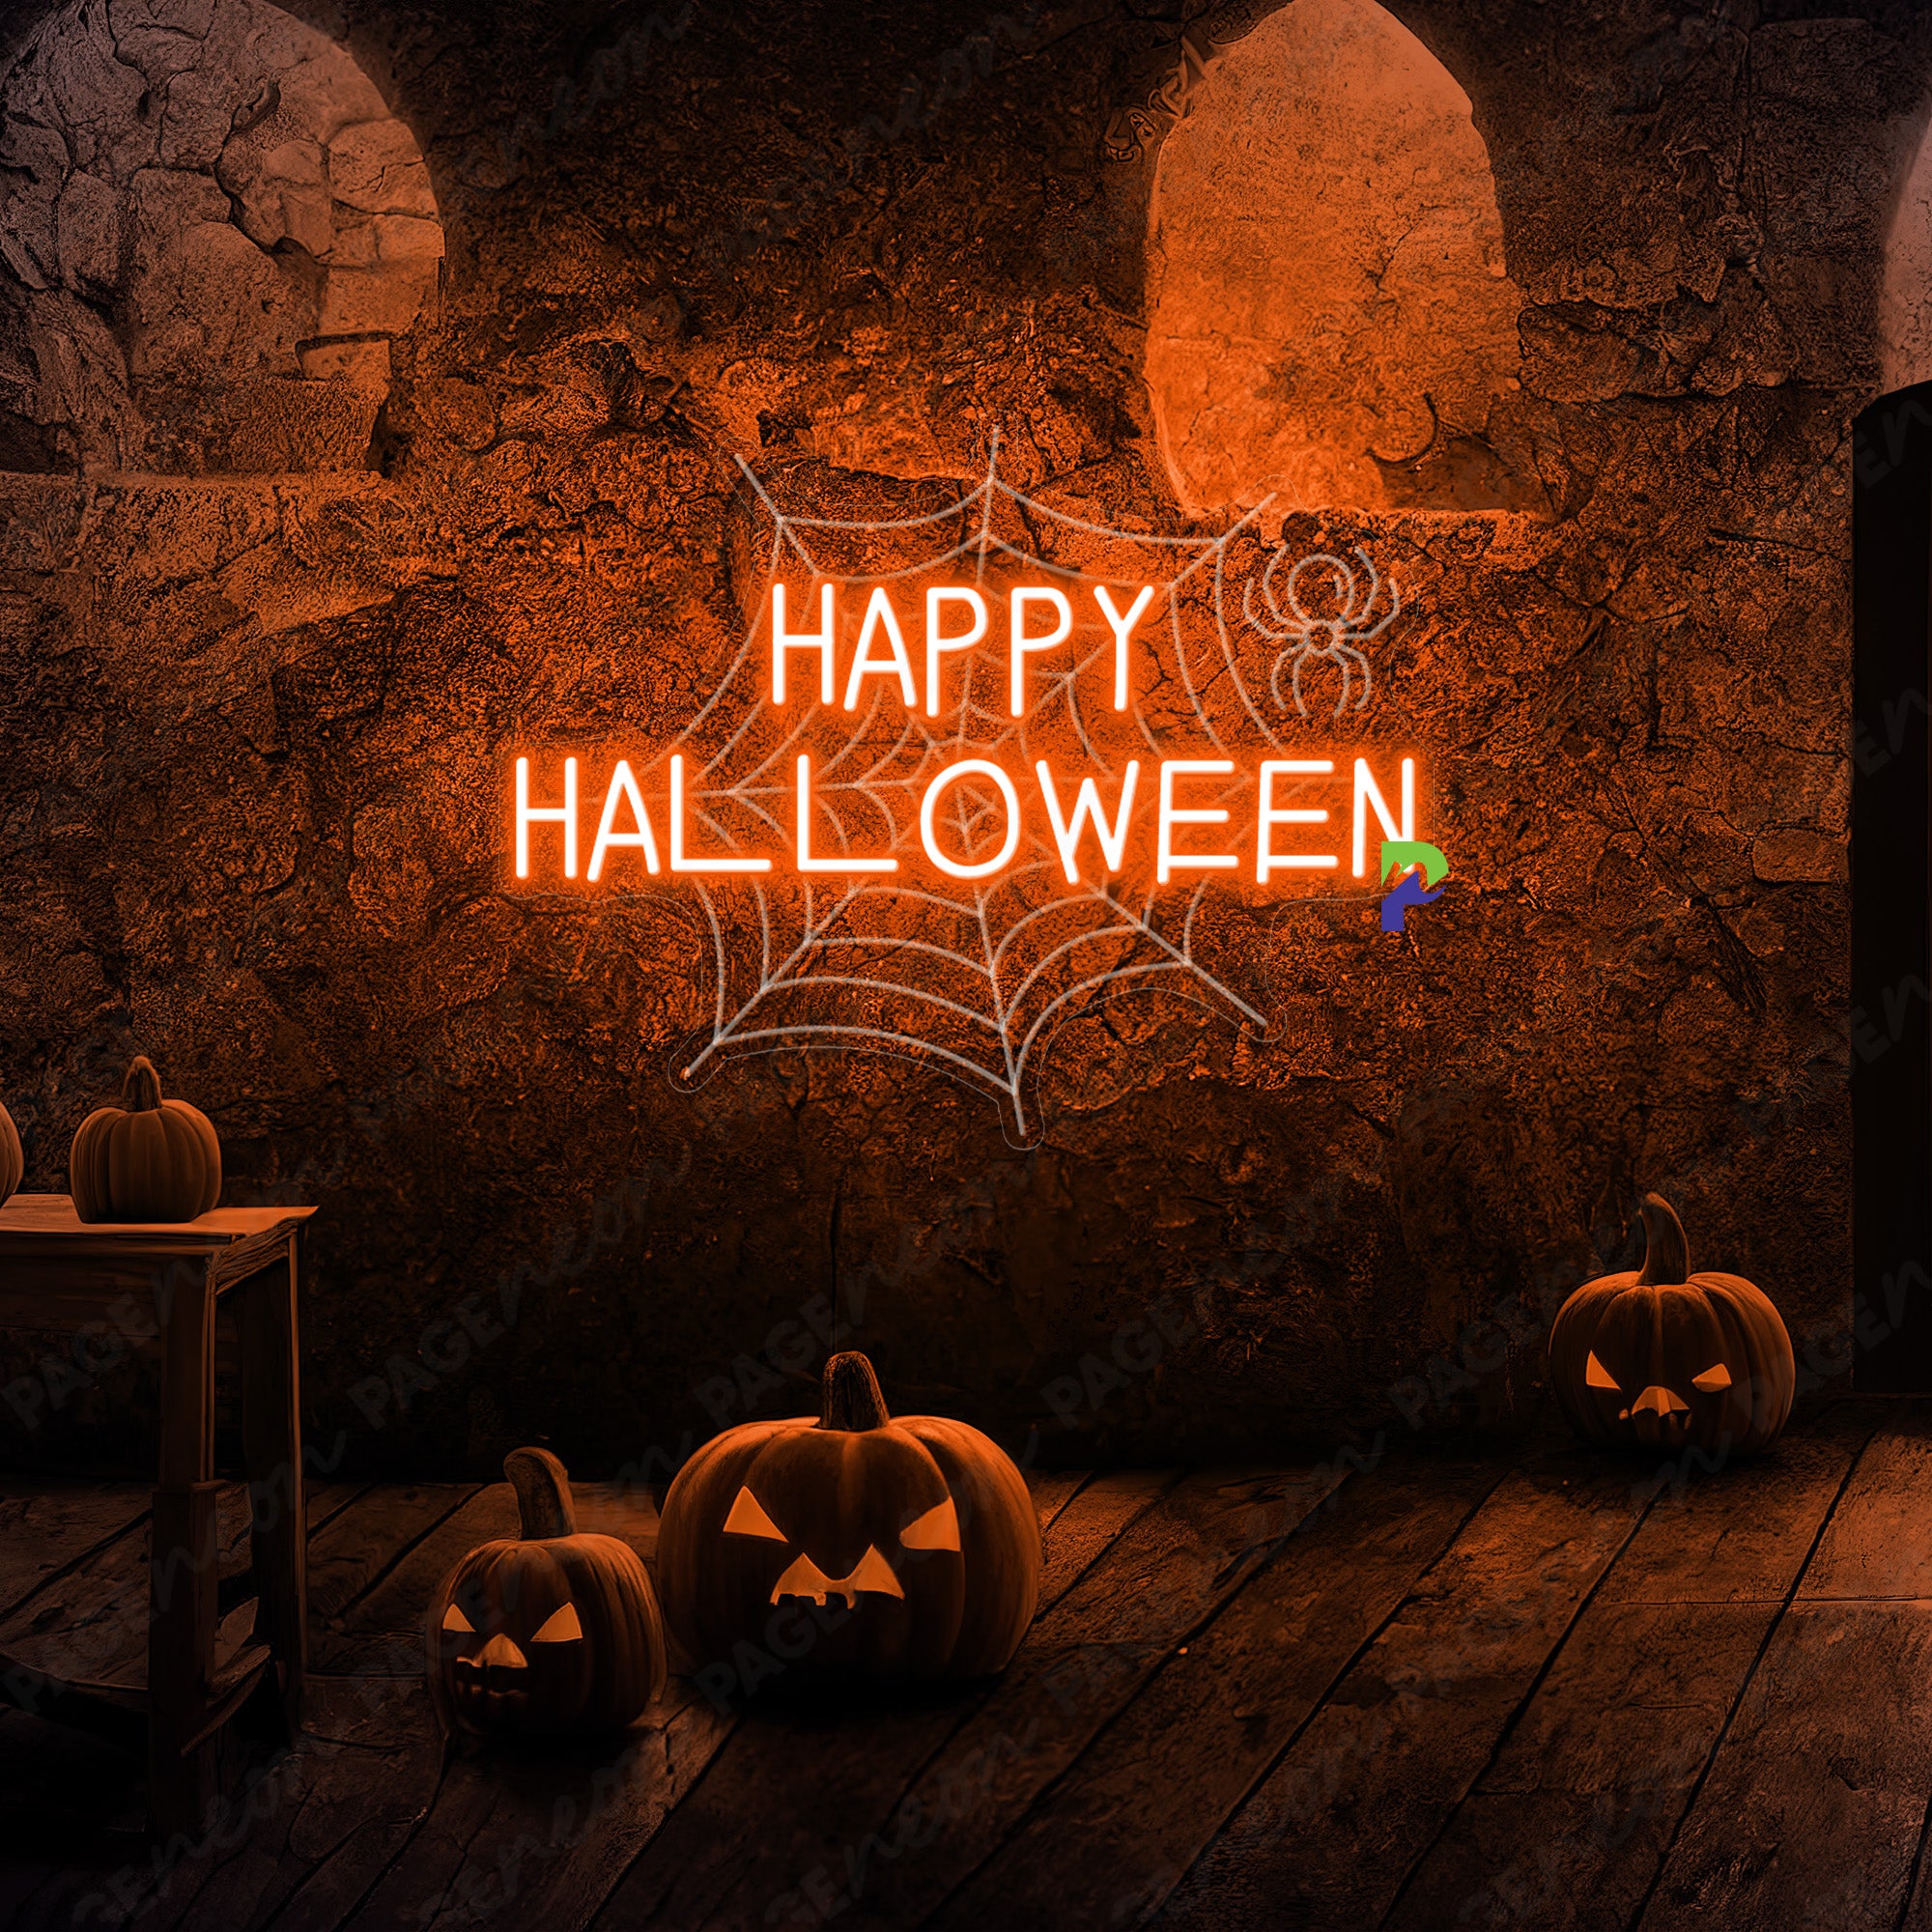 Happy Halloween Neon Sign Spooky Led Light 2